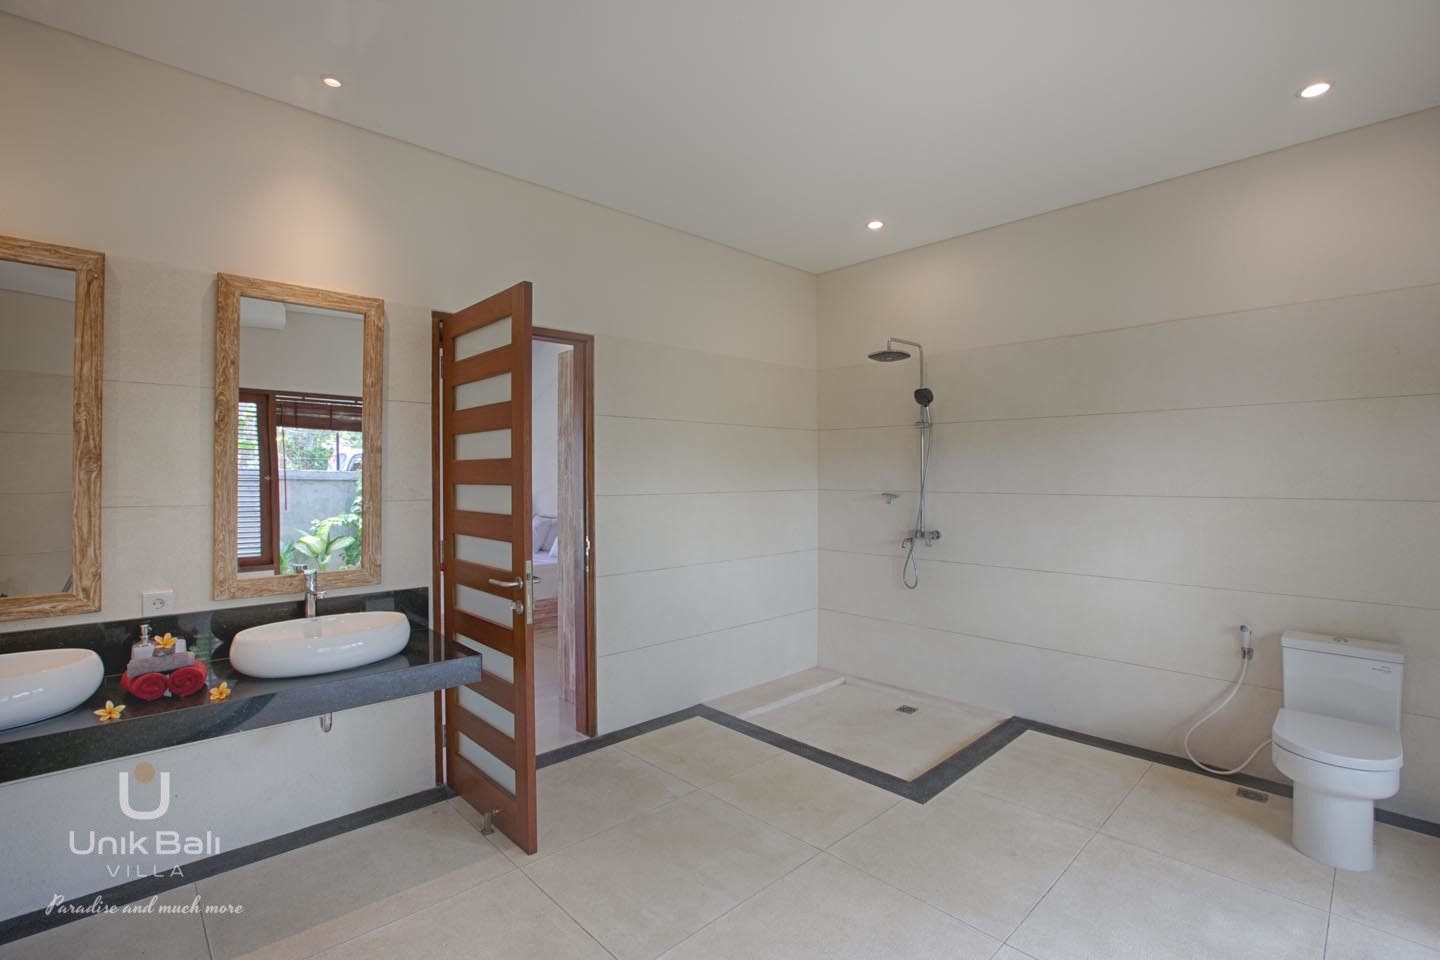 unik-bali-villa-marsun-for-rent-spacious-private-bathroom